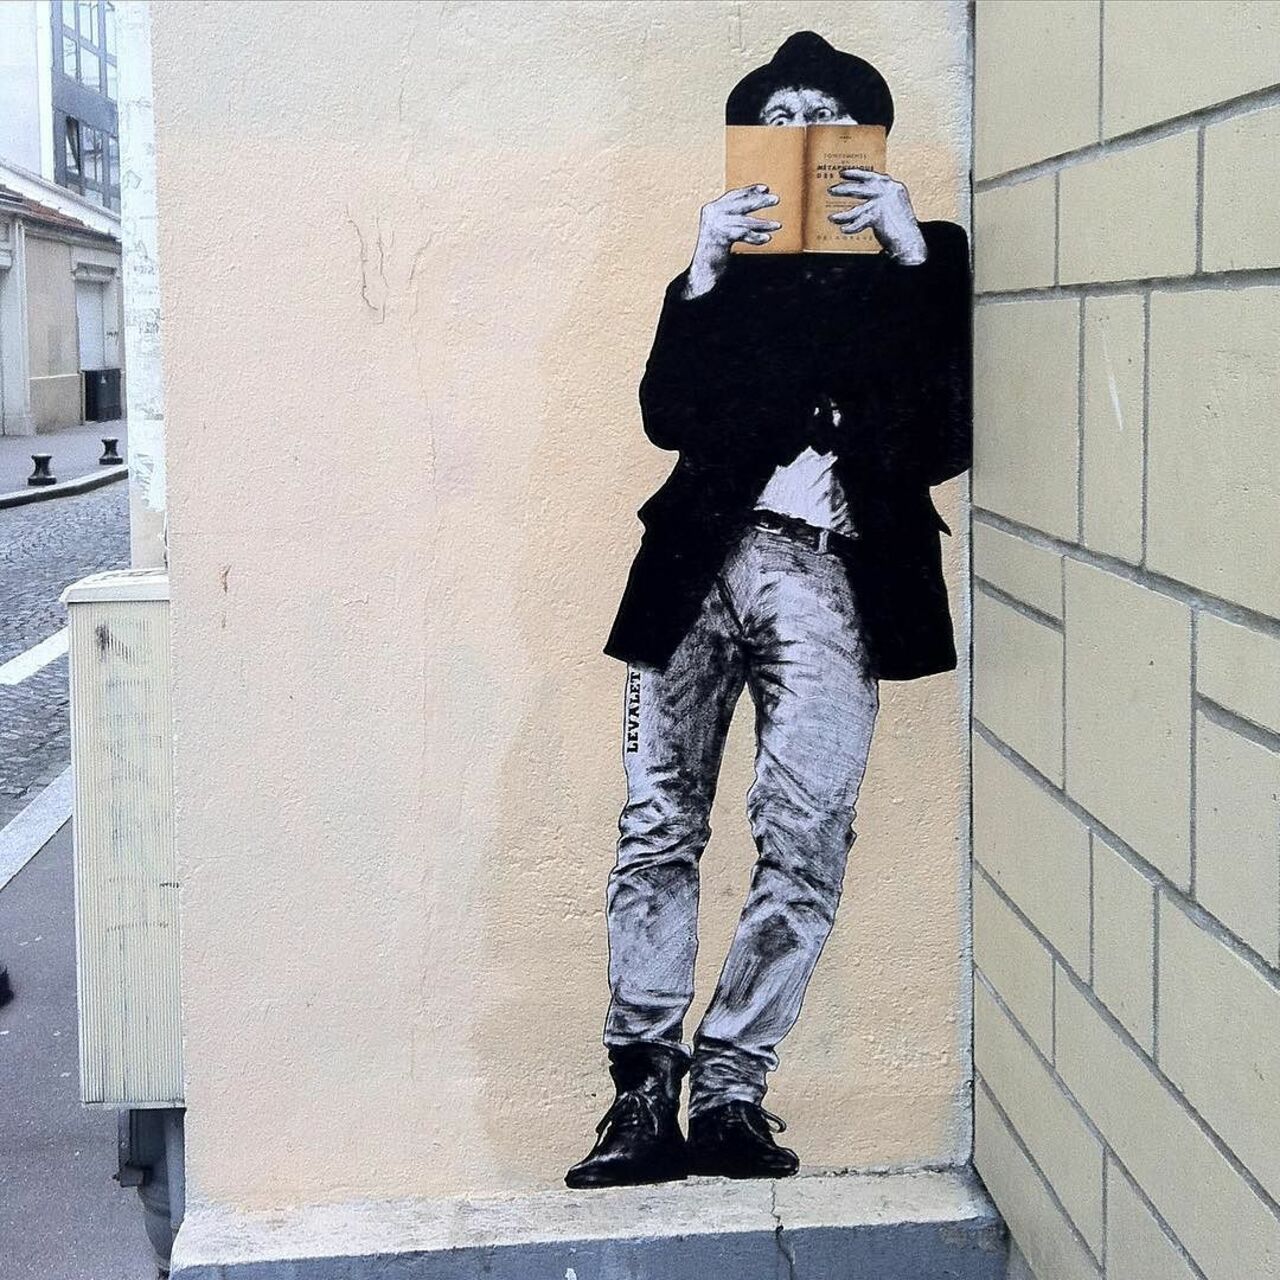 #Paris #graffiti photo by @jeanlucr http://ift.tt/1XpUCmr #StreetArt https://t.co/NOTcAZLjZq